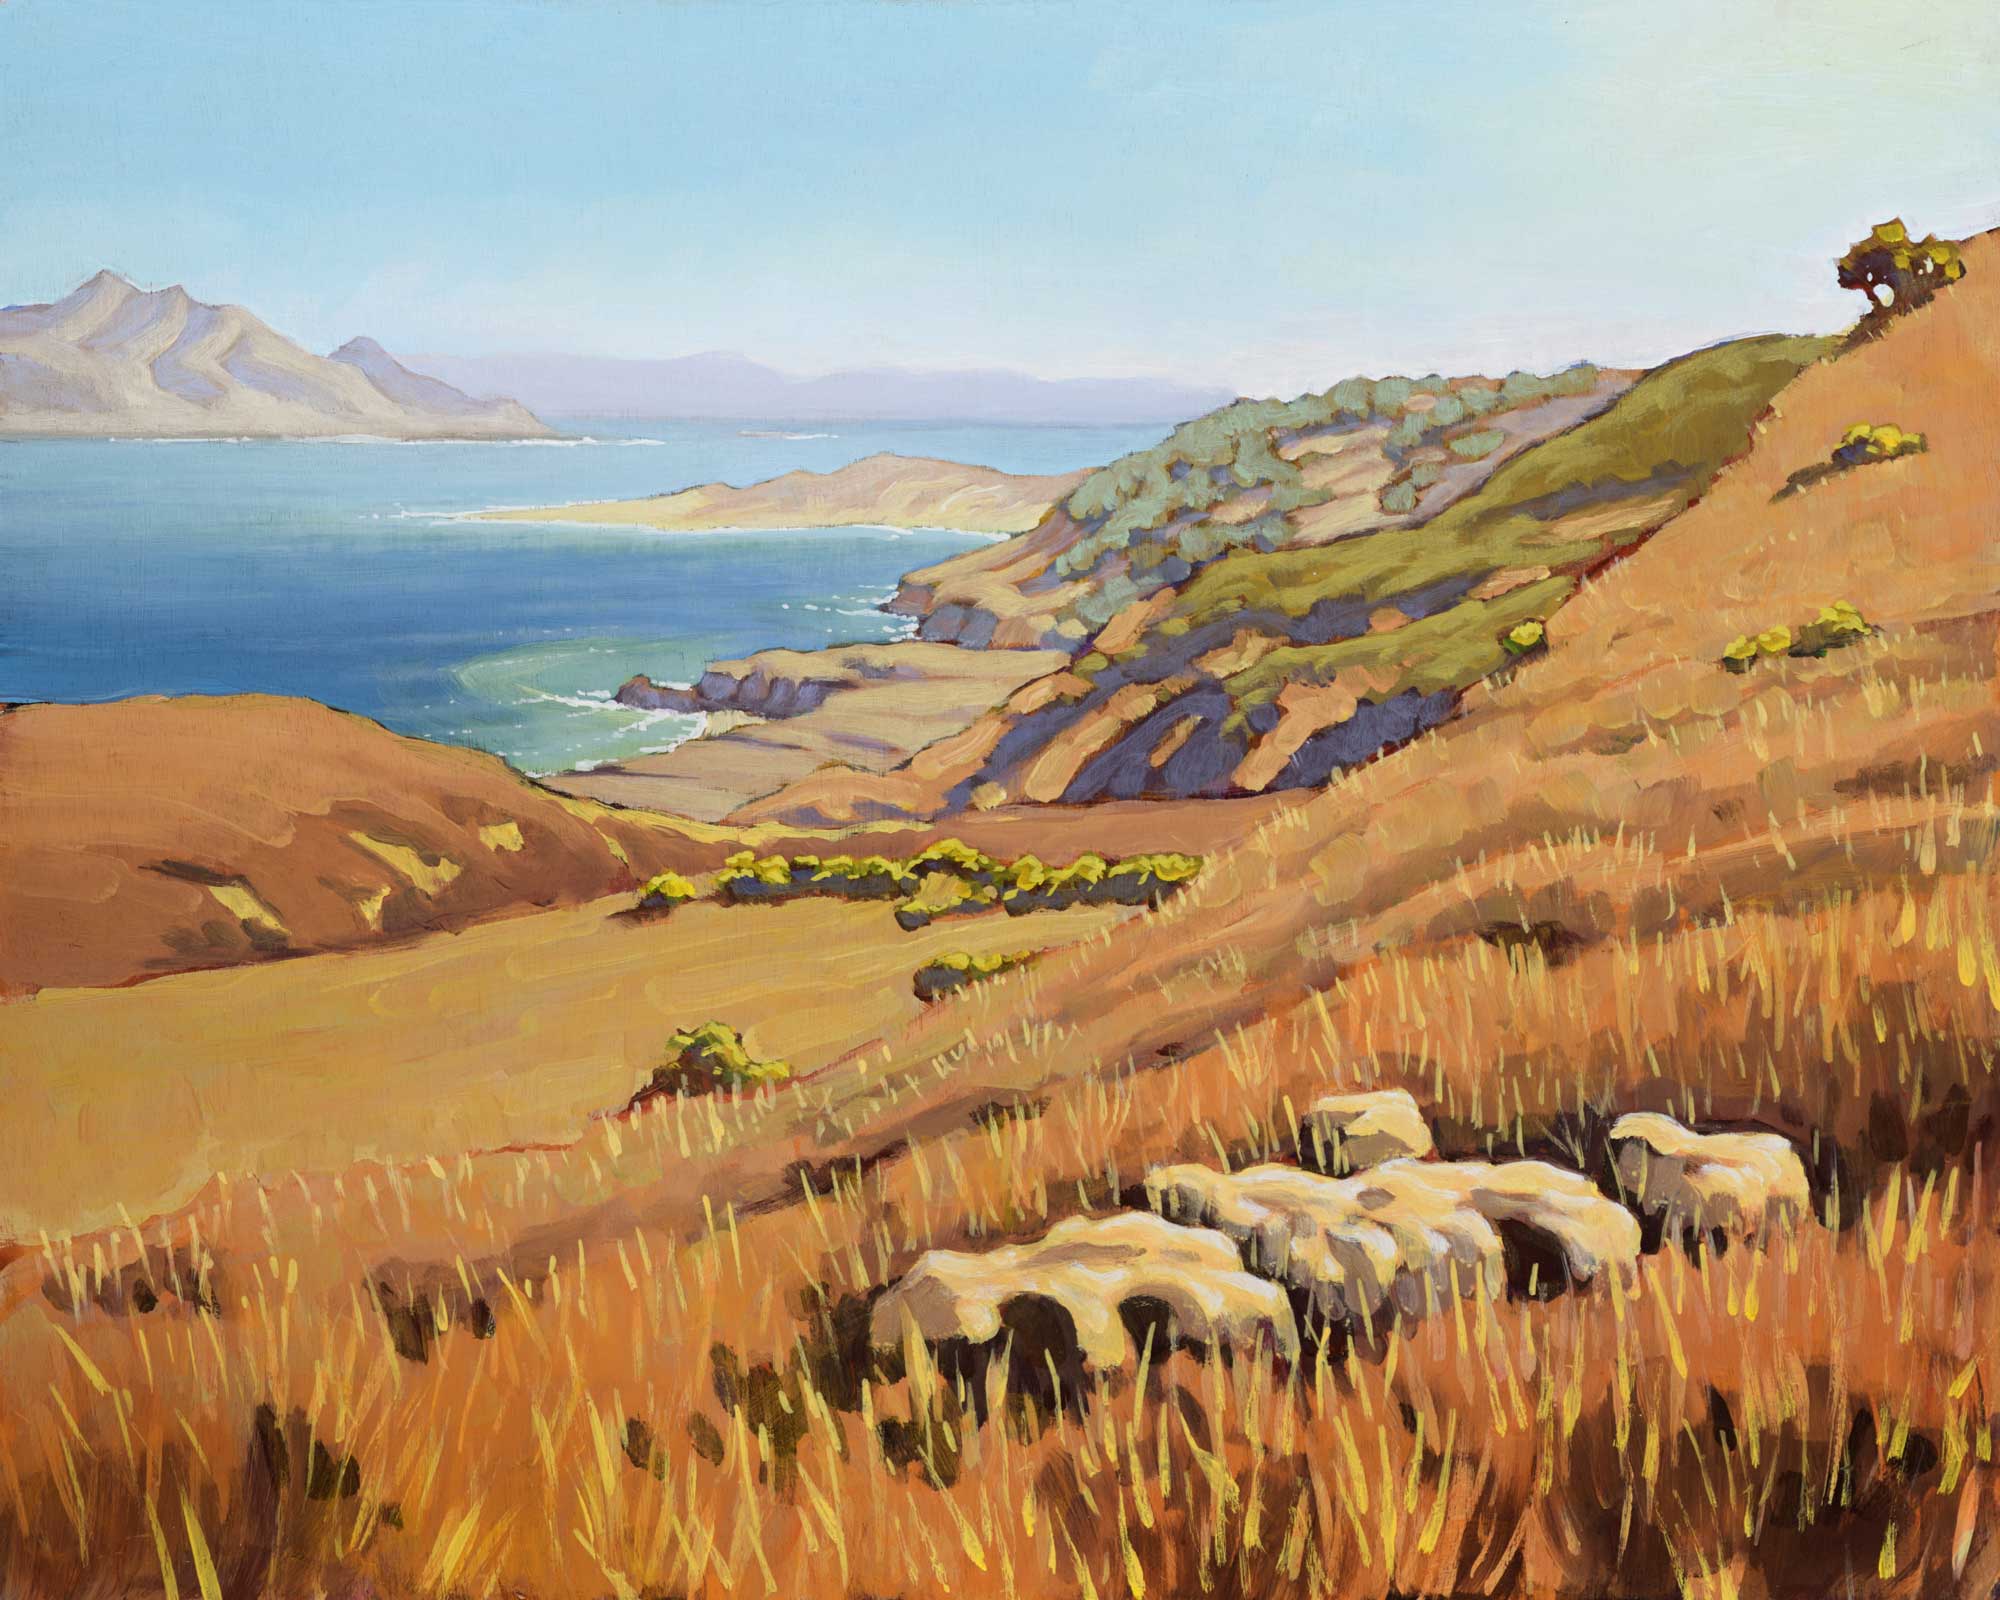 Plein air artwork of view of Skunk Point and Santa Cruz island from Santa Rosa Island off the coast of California